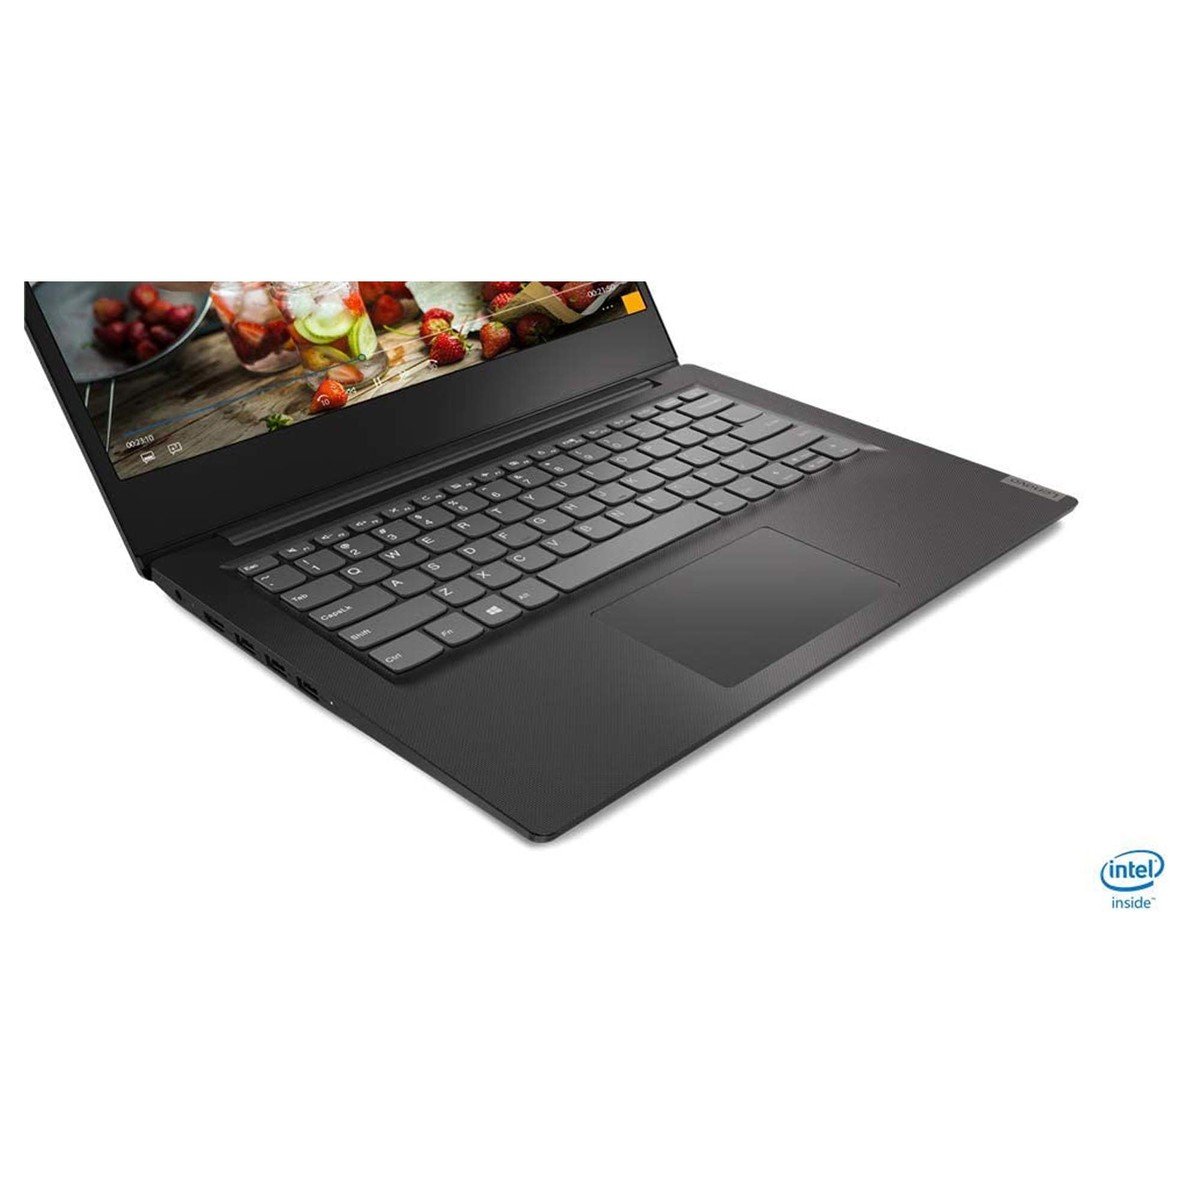 Lenovo ideapad S145-15IGM 81MX0050AX Laptop, Granite Black,(Celeron, 4GB, 1TB, 15.6" HD, Intel HD, Win10) English/Arabic Keyboard